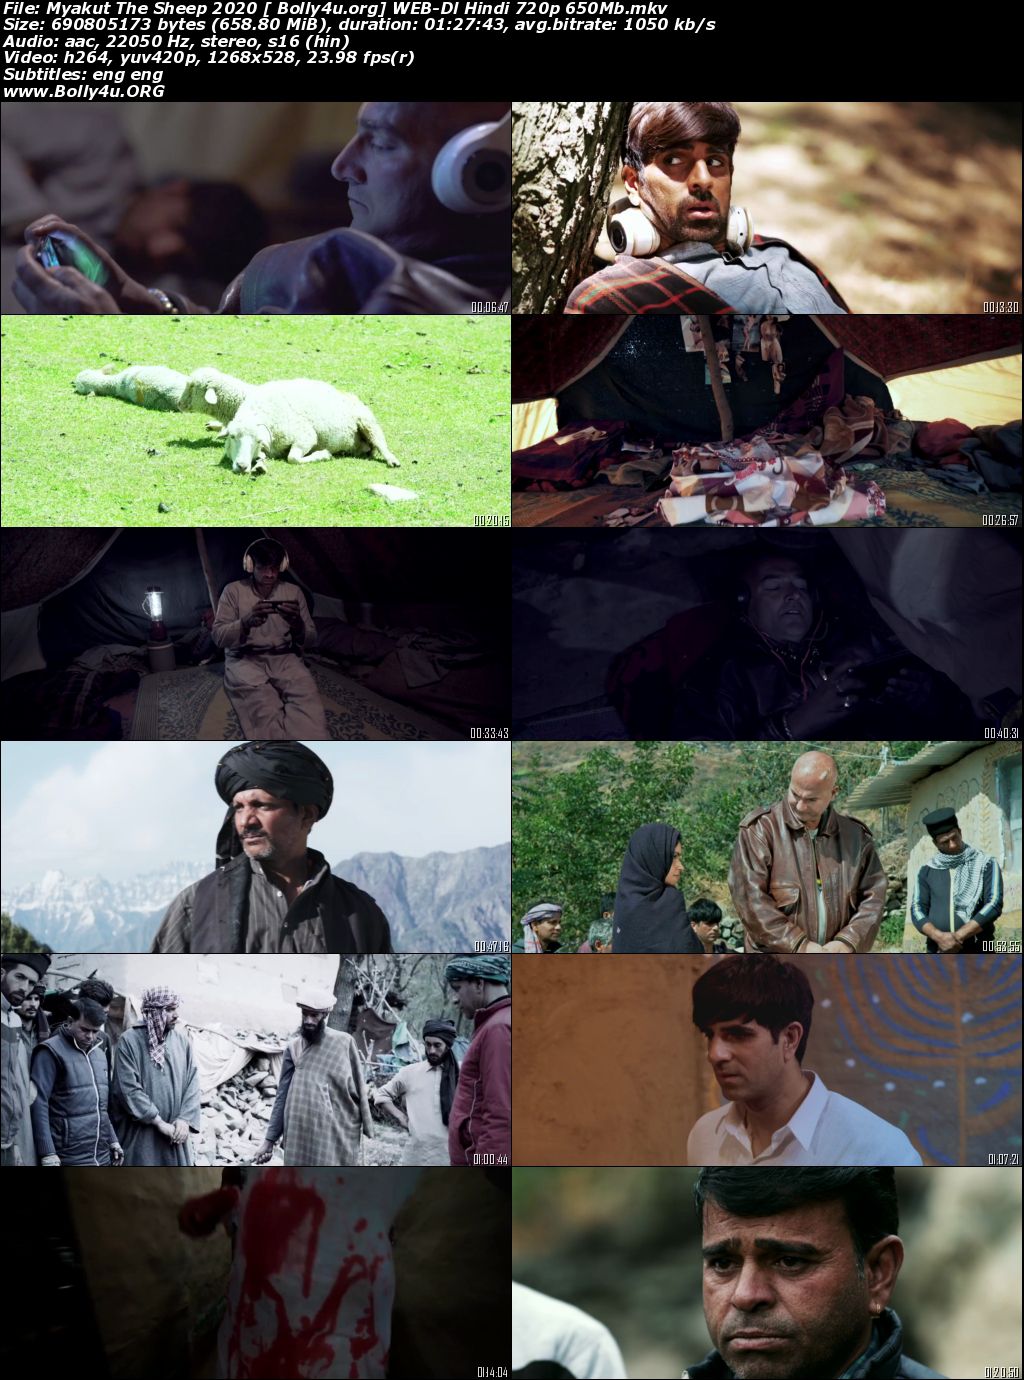 Myakut The Sheep 2020 WEB-DL 650Mb Hindi Movie Download 720p